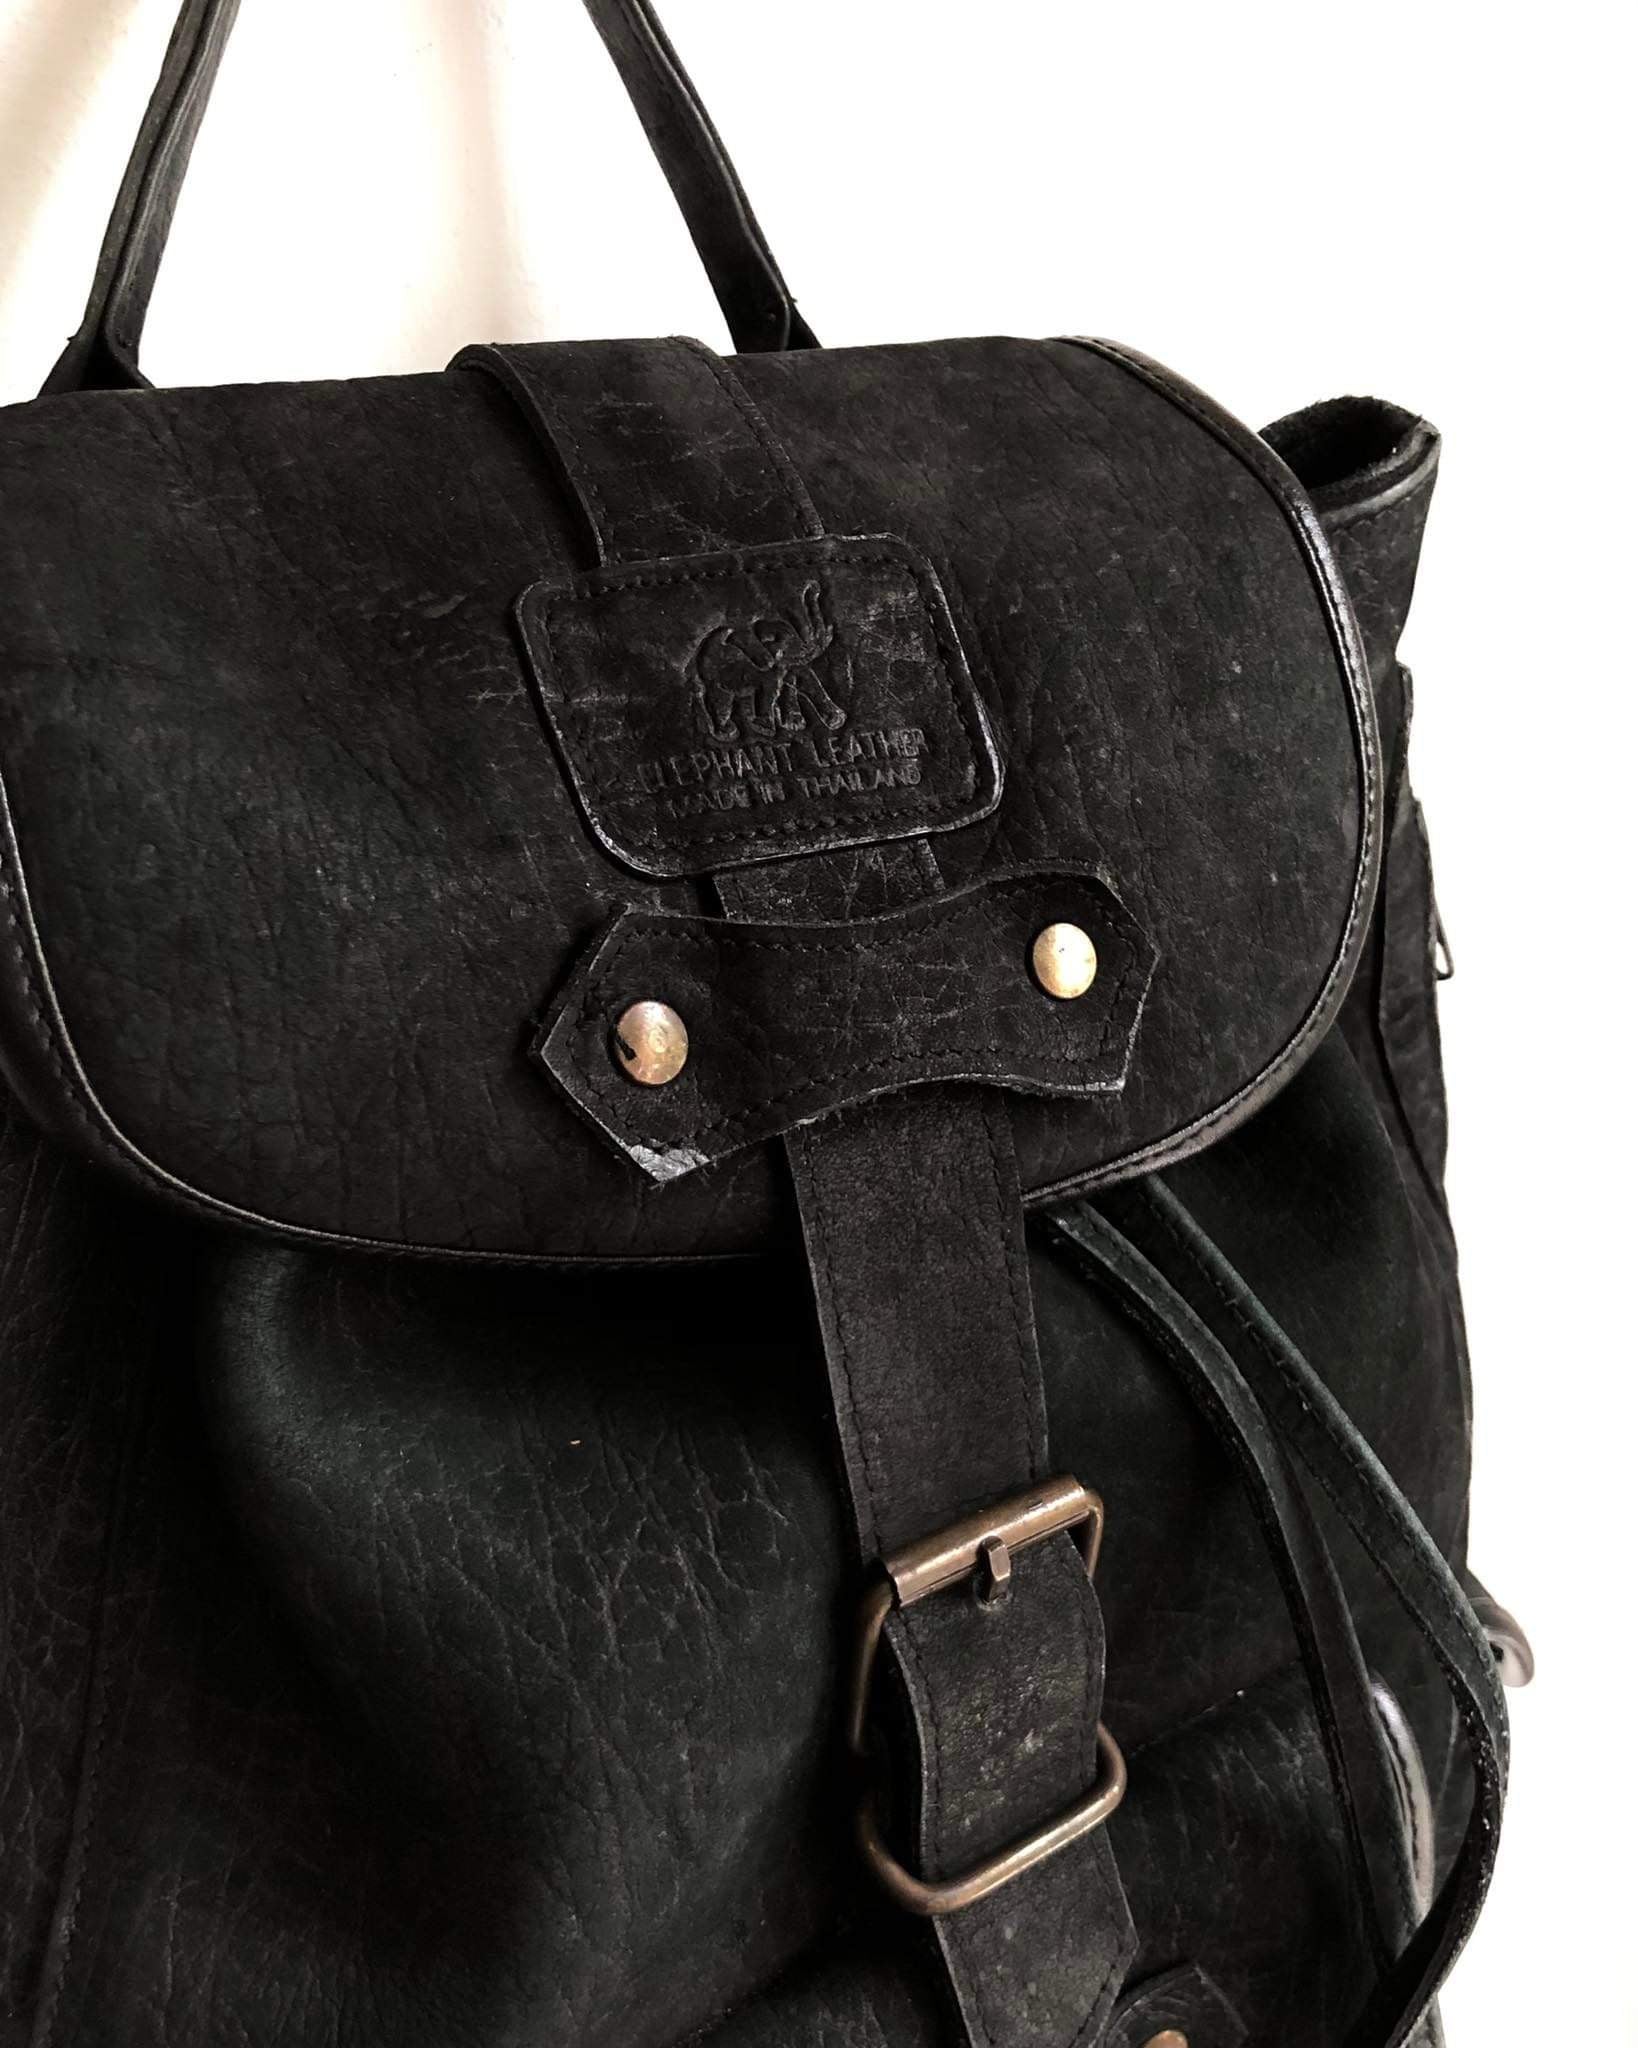 Elephant Leather Backpack